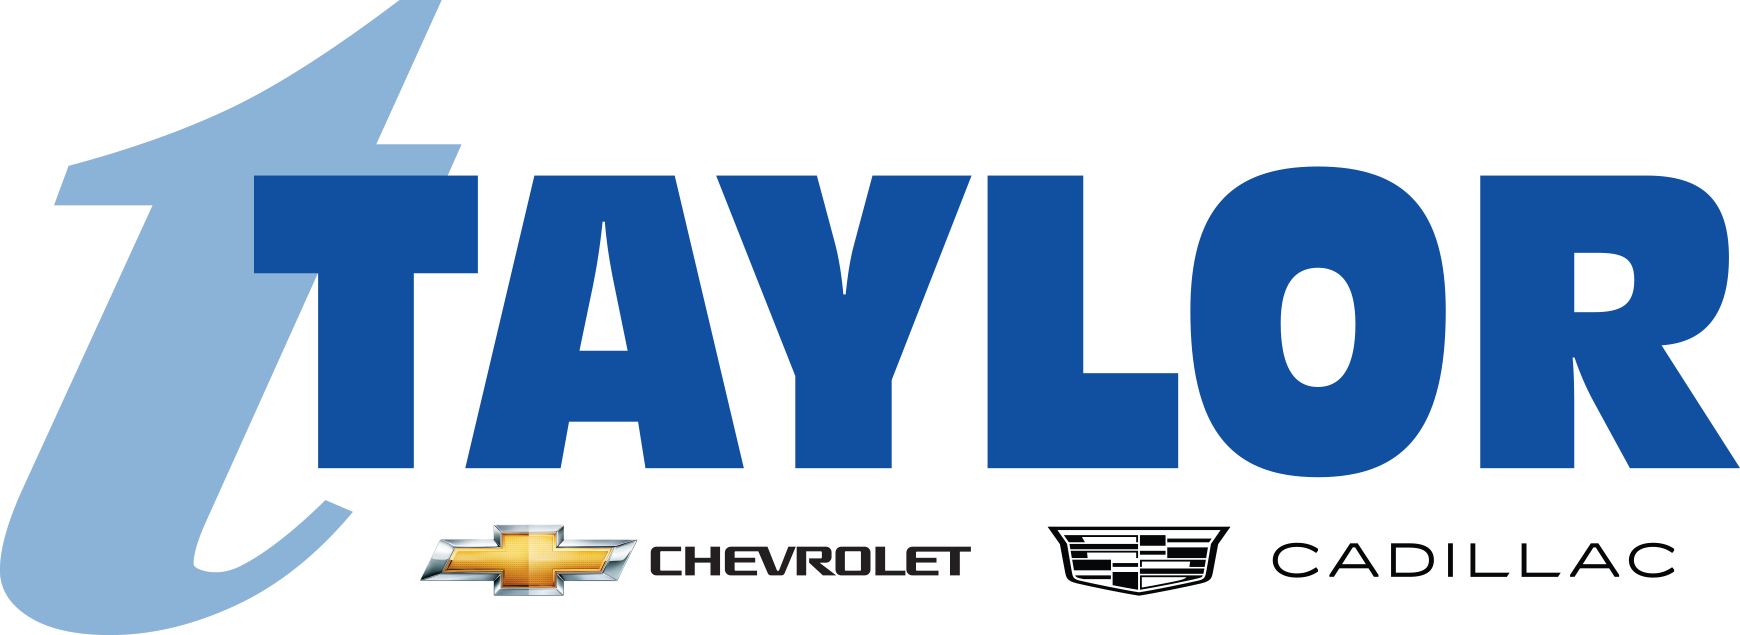 Taylor Chevrolet Cadillac